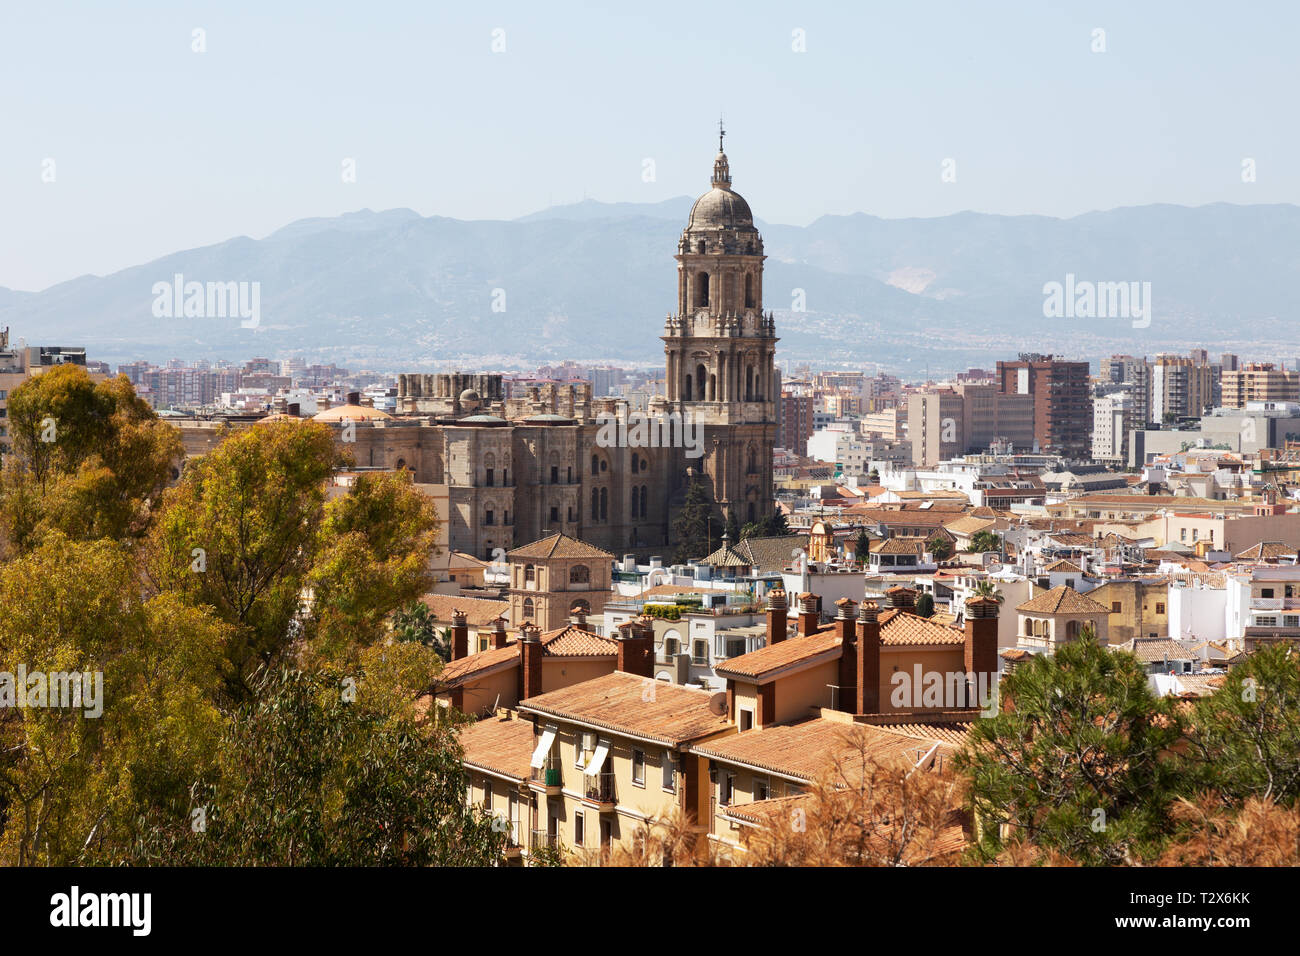 Die Kathedrale von Malaga, Malaga Altstadt Skyline, Malaga Andalusien Spanien Europa Stockfoto